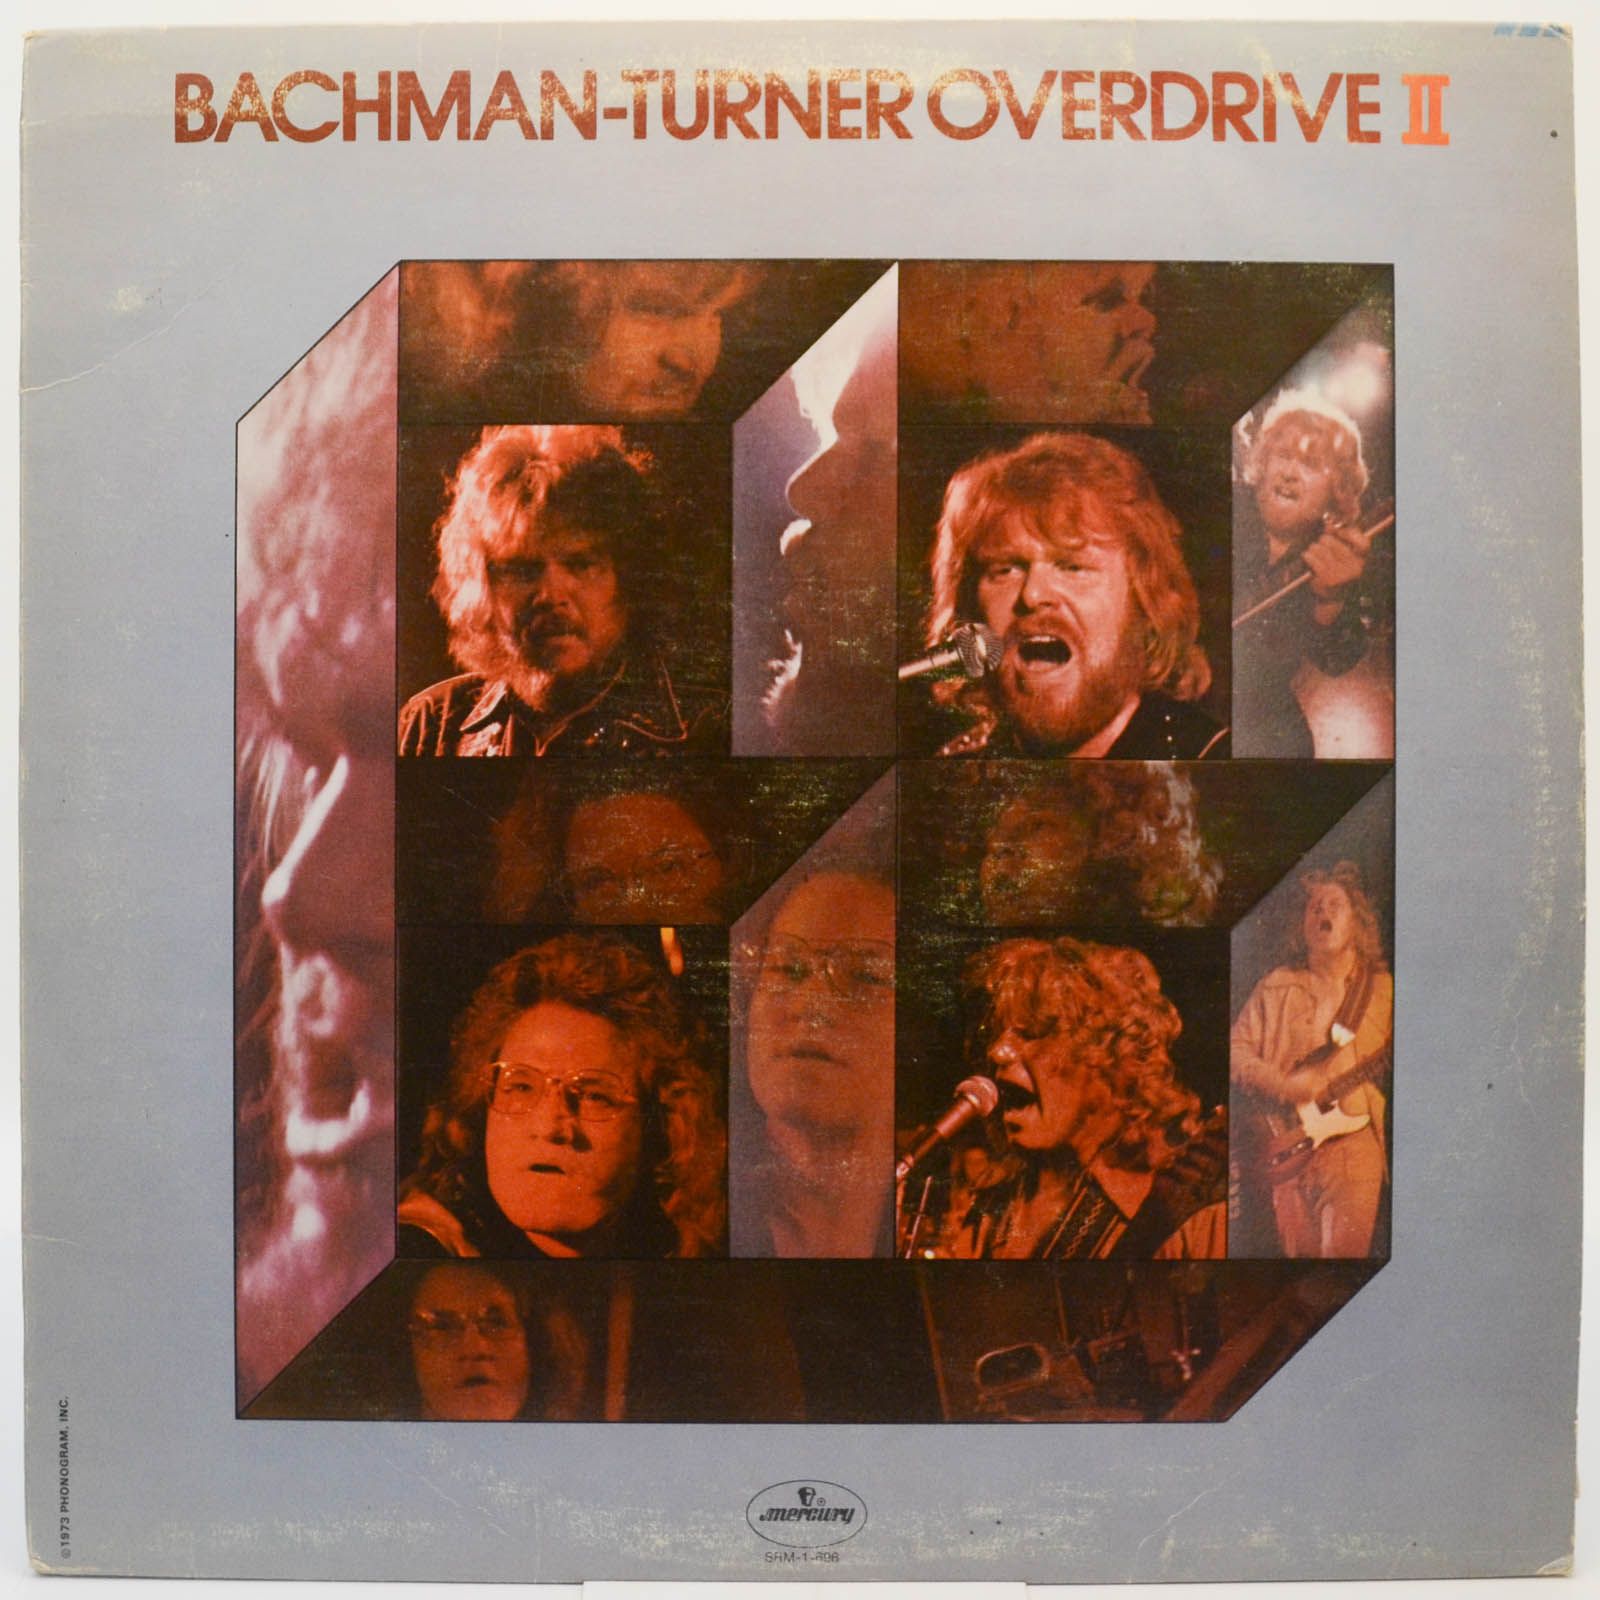 Bachman-Turner Overdrive — Bachman-Turner Overdrive II (1-st, Canada), 1973